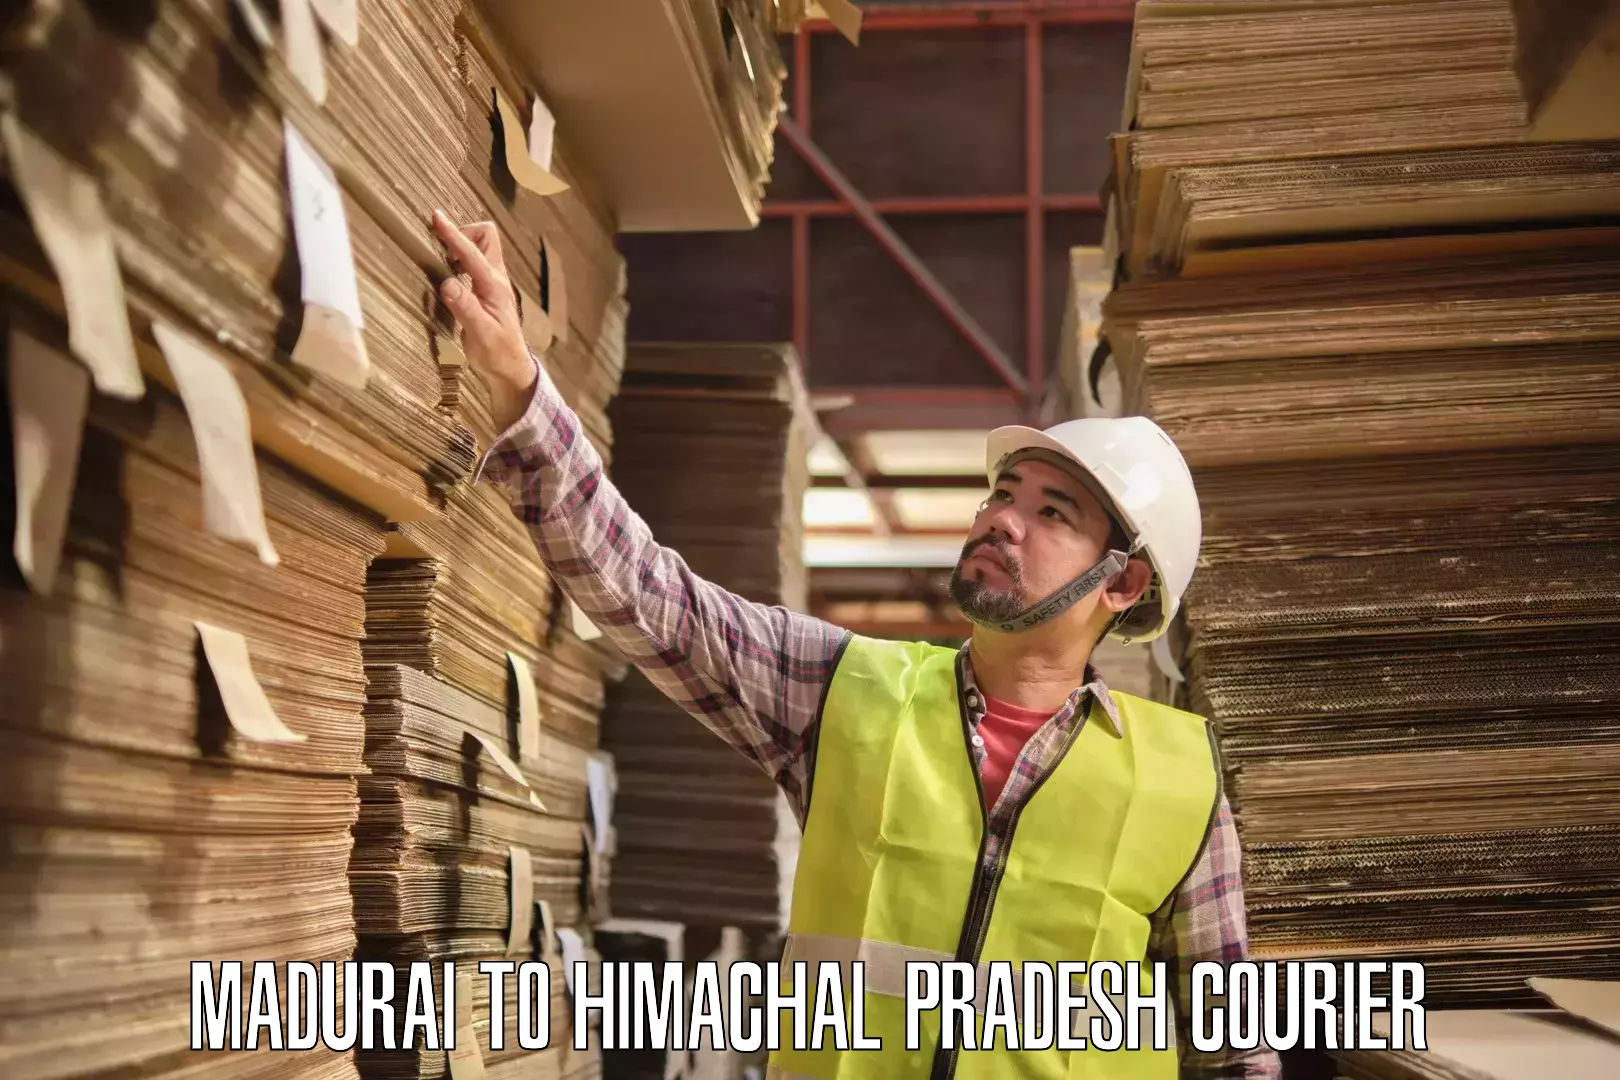 Courier service comparison in Madurai to Himachal Pradesh